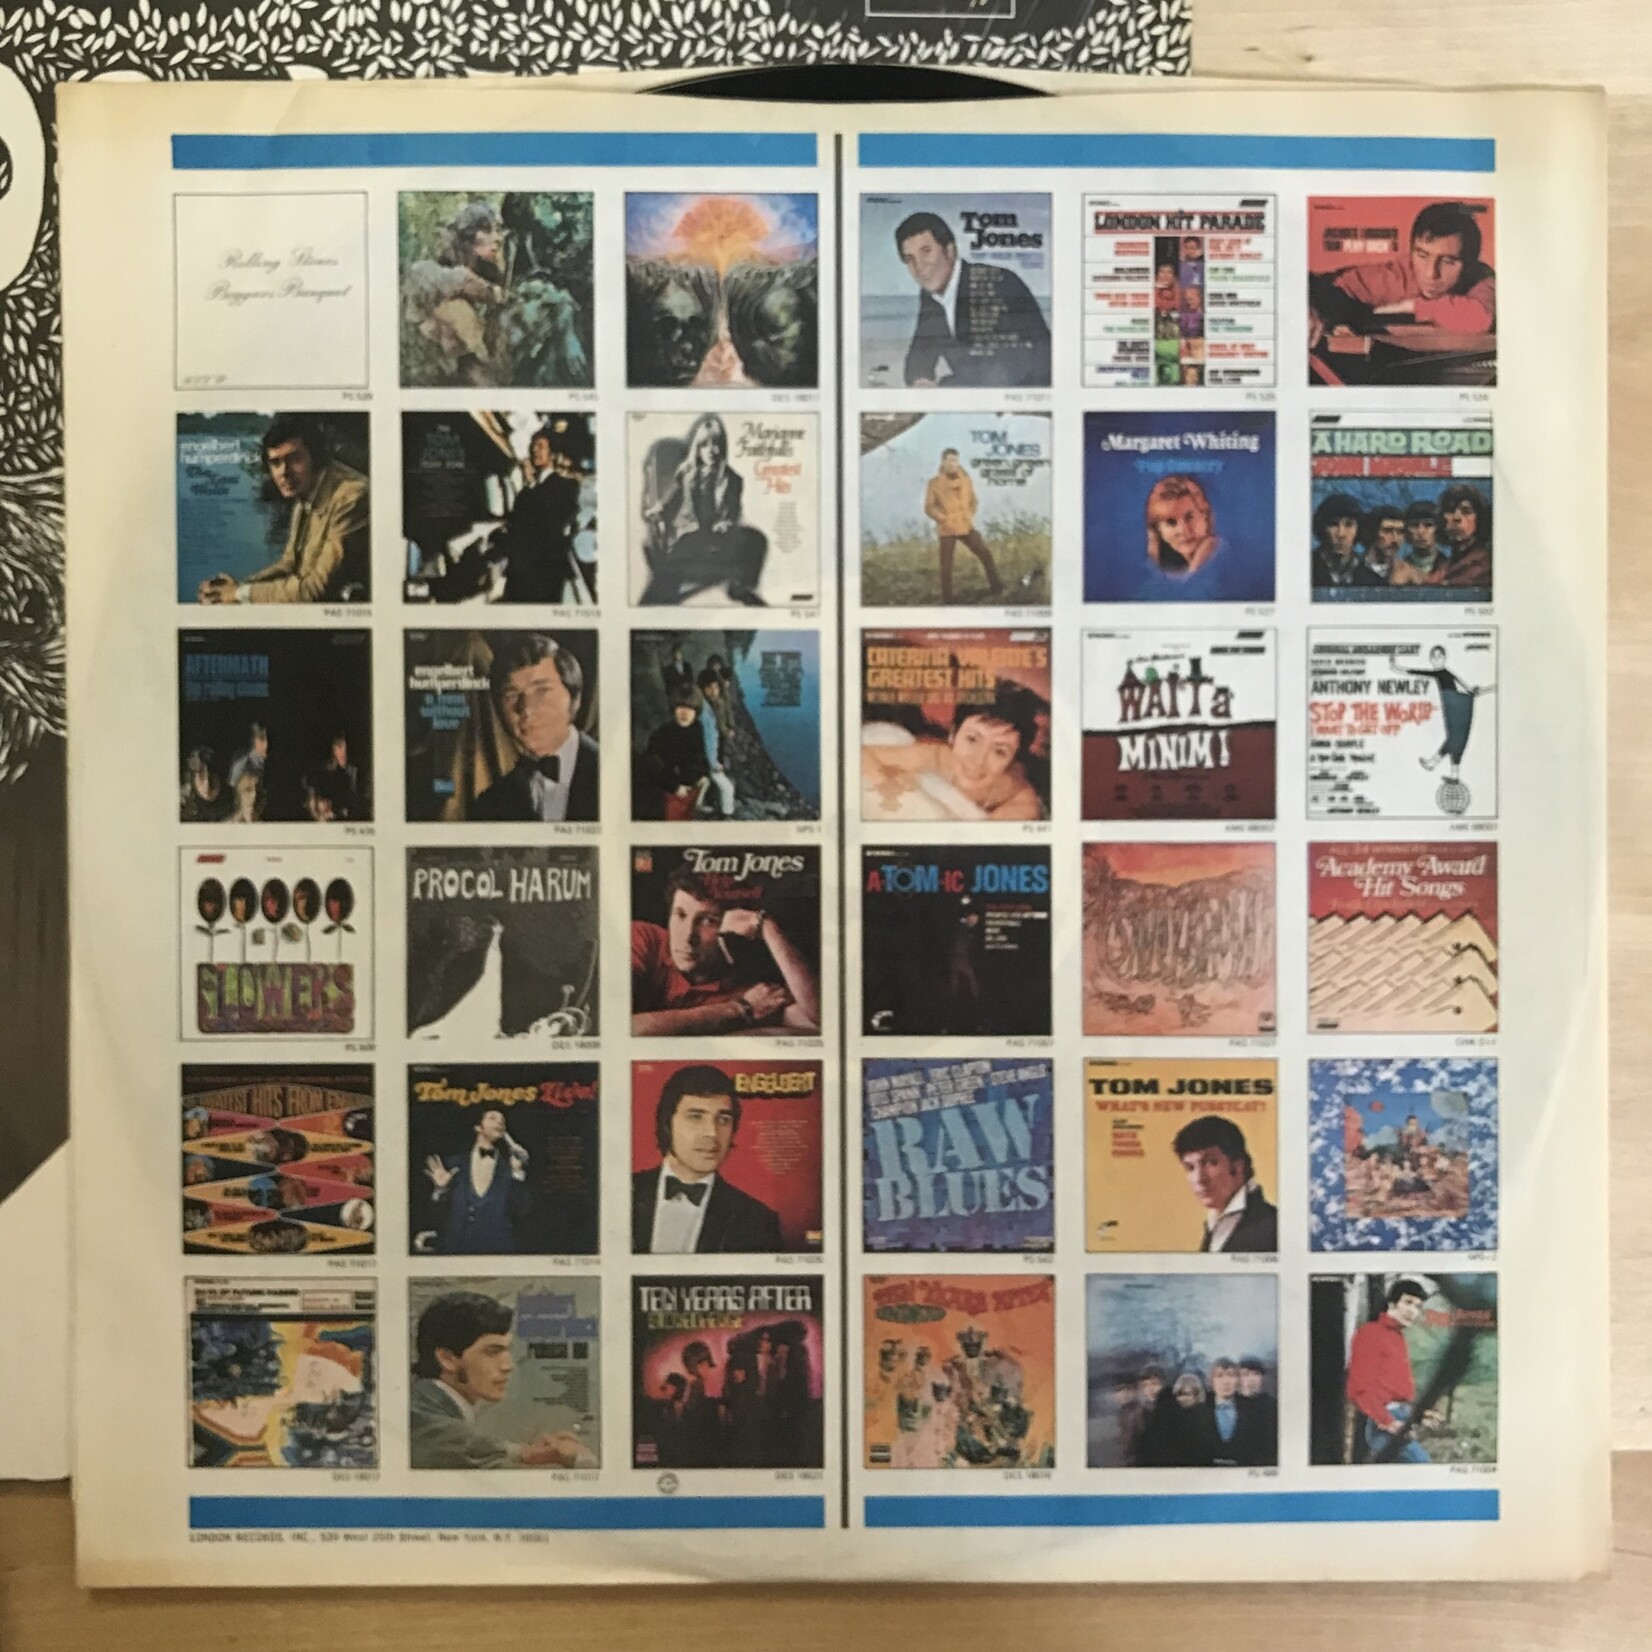 Procol Harum - Procol Harum - DES18008 - Vinyl LP w/ Poster (USED)